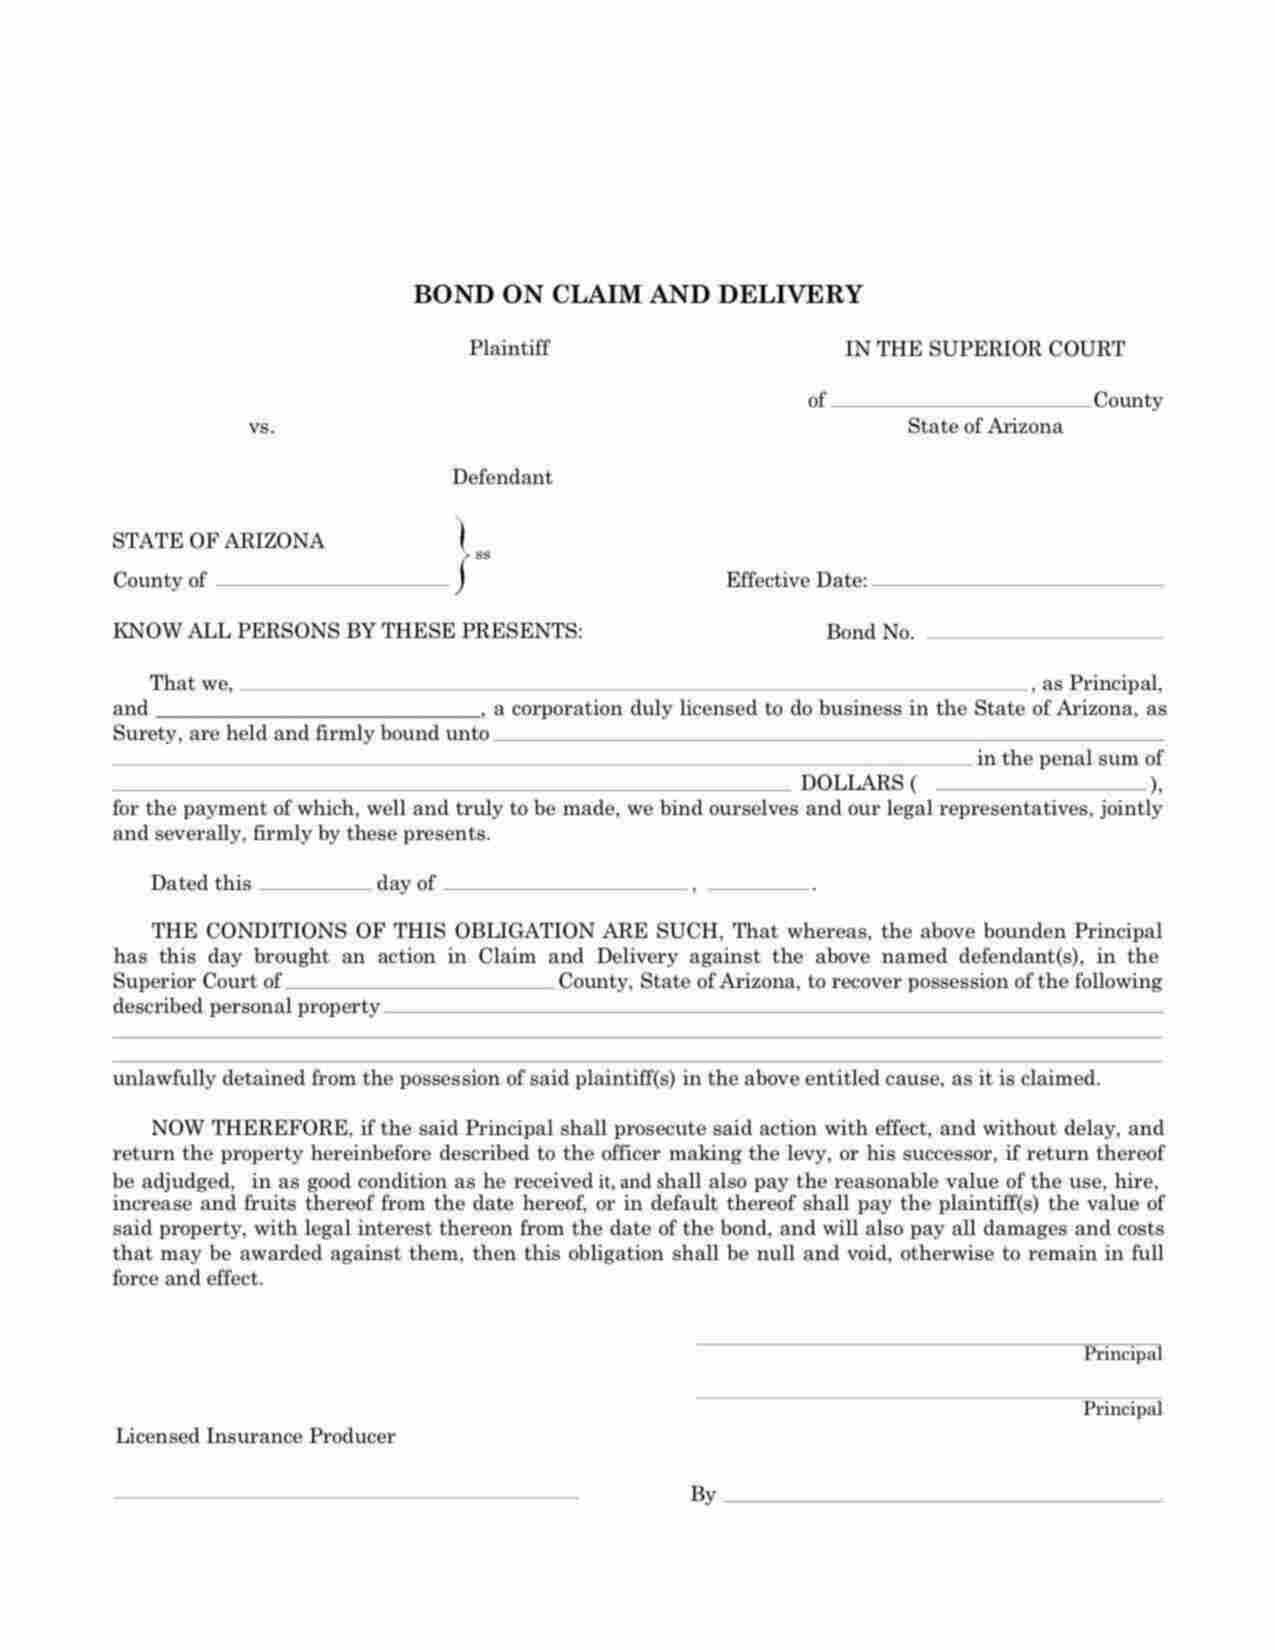 Arizona Claim and Delivery Bond Form